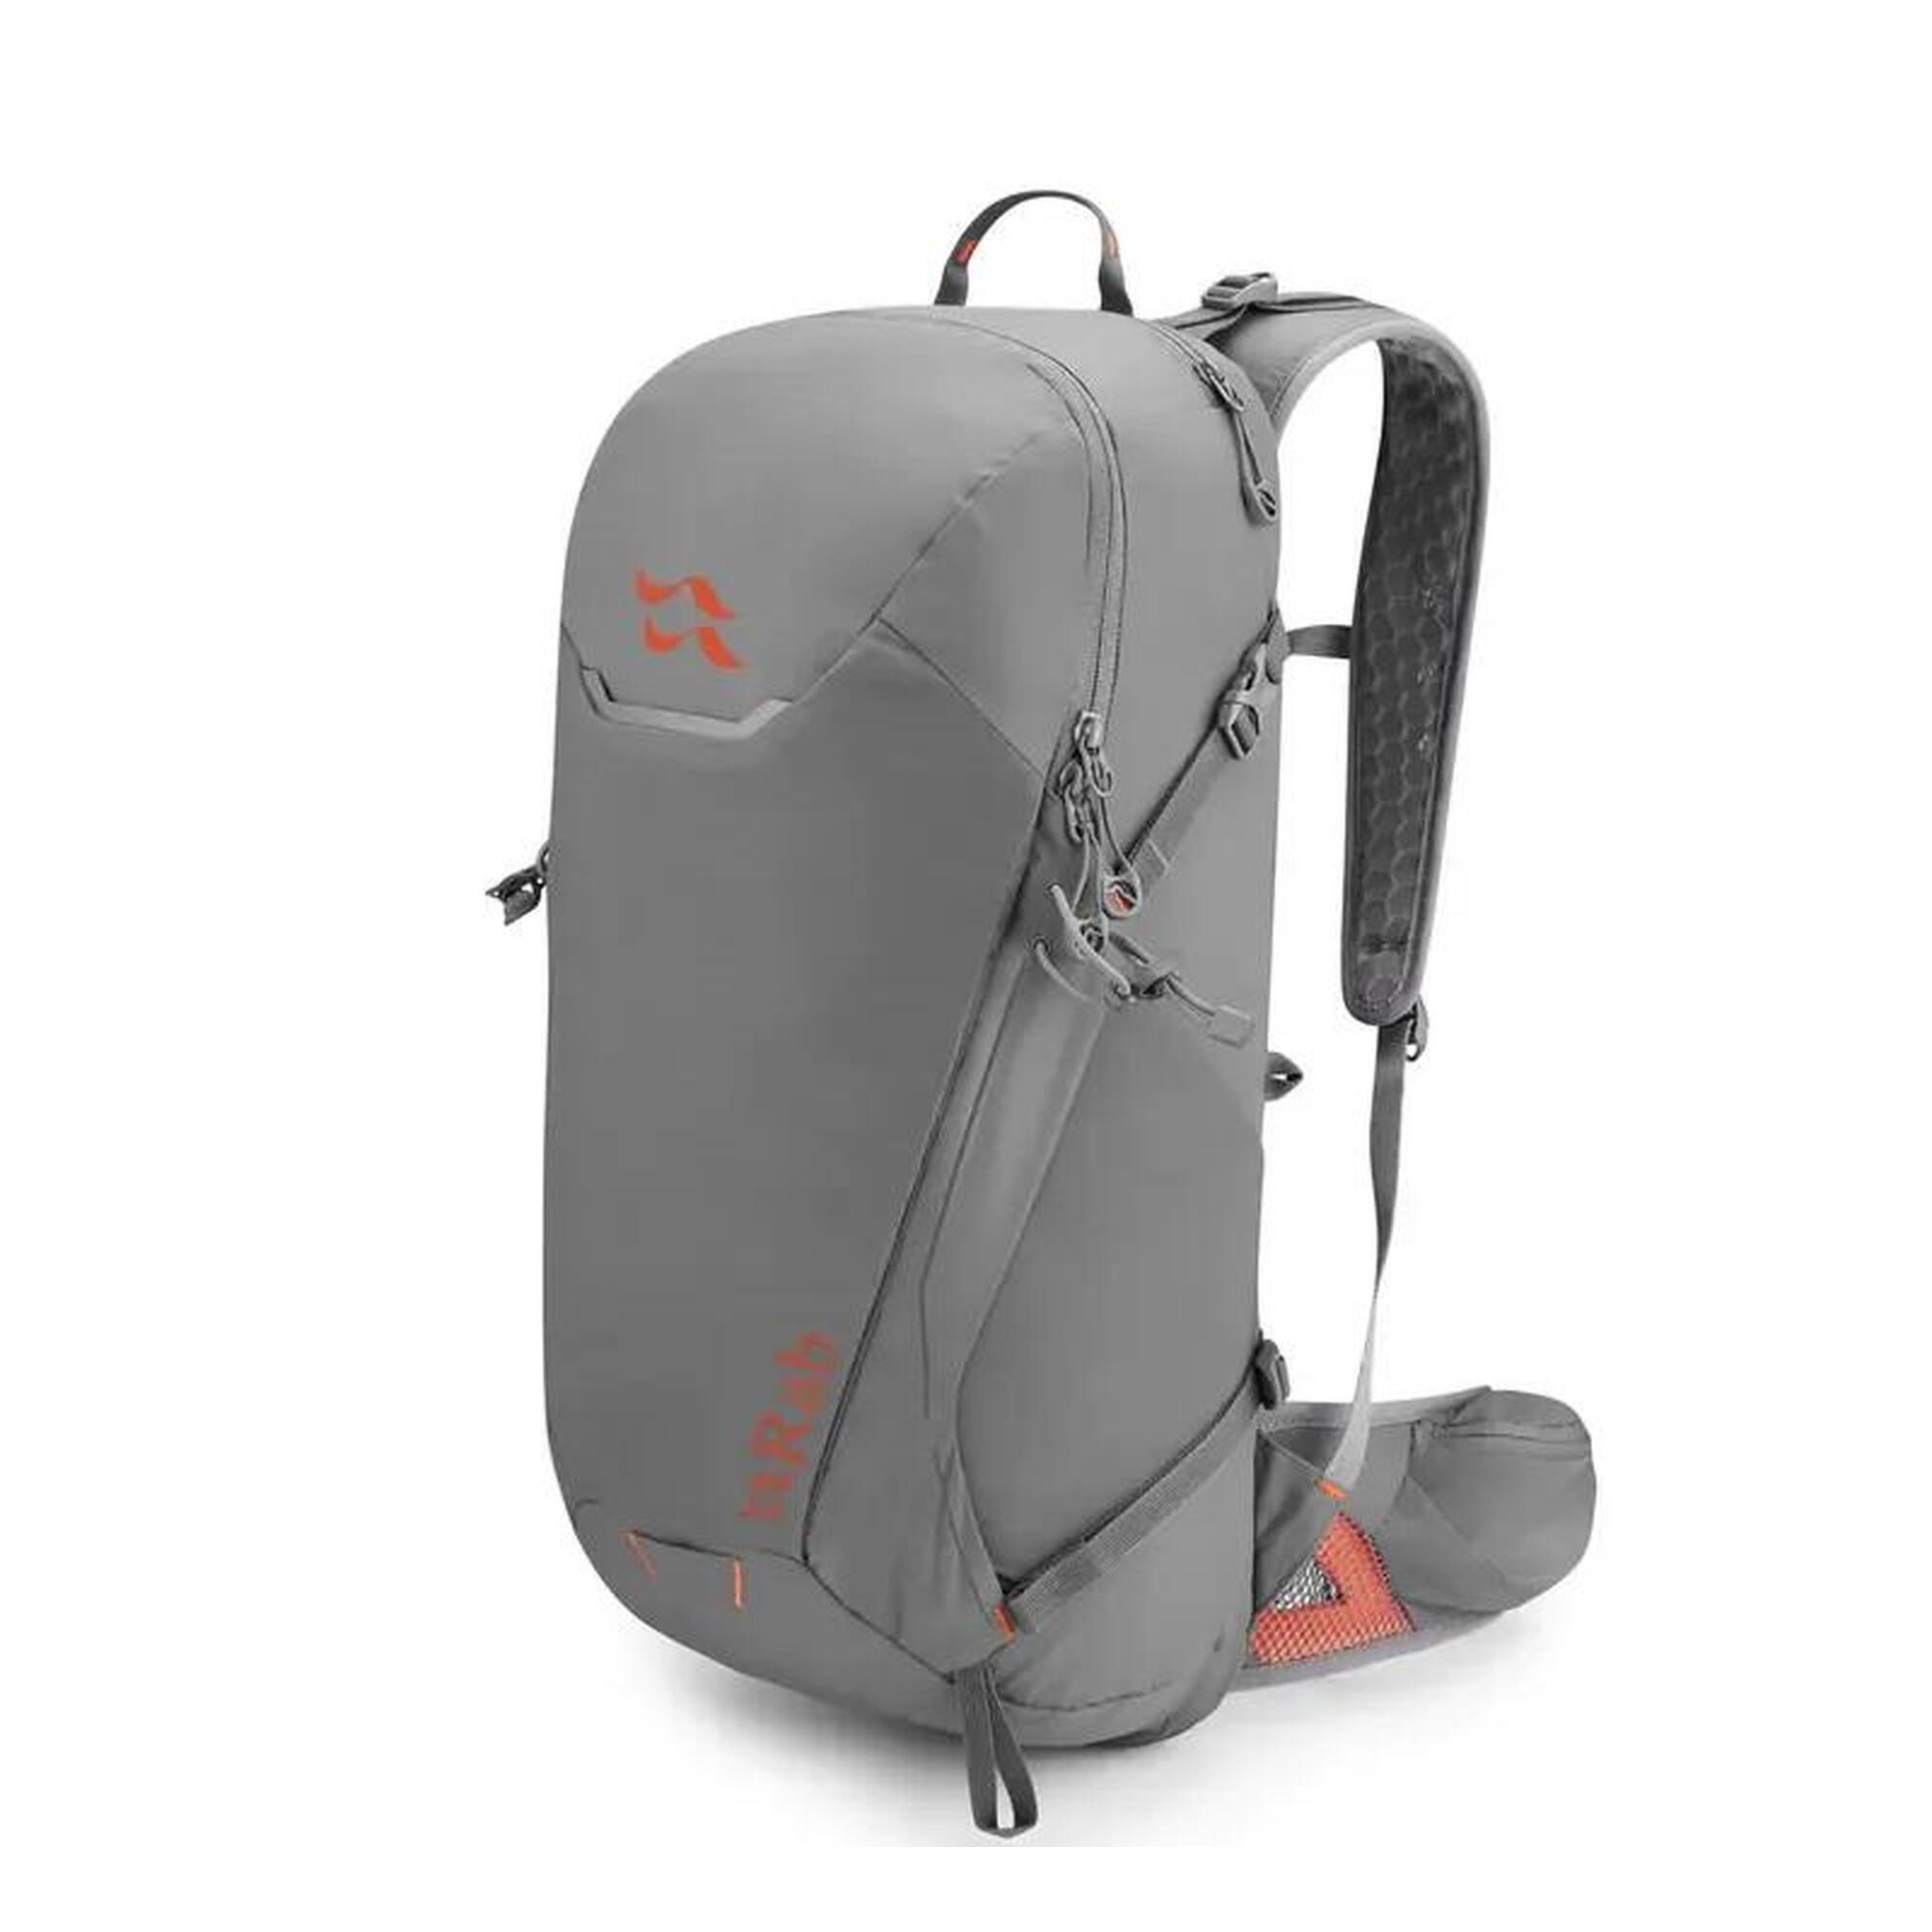 Aeon Hiking Backpack 27 L - Light Grey